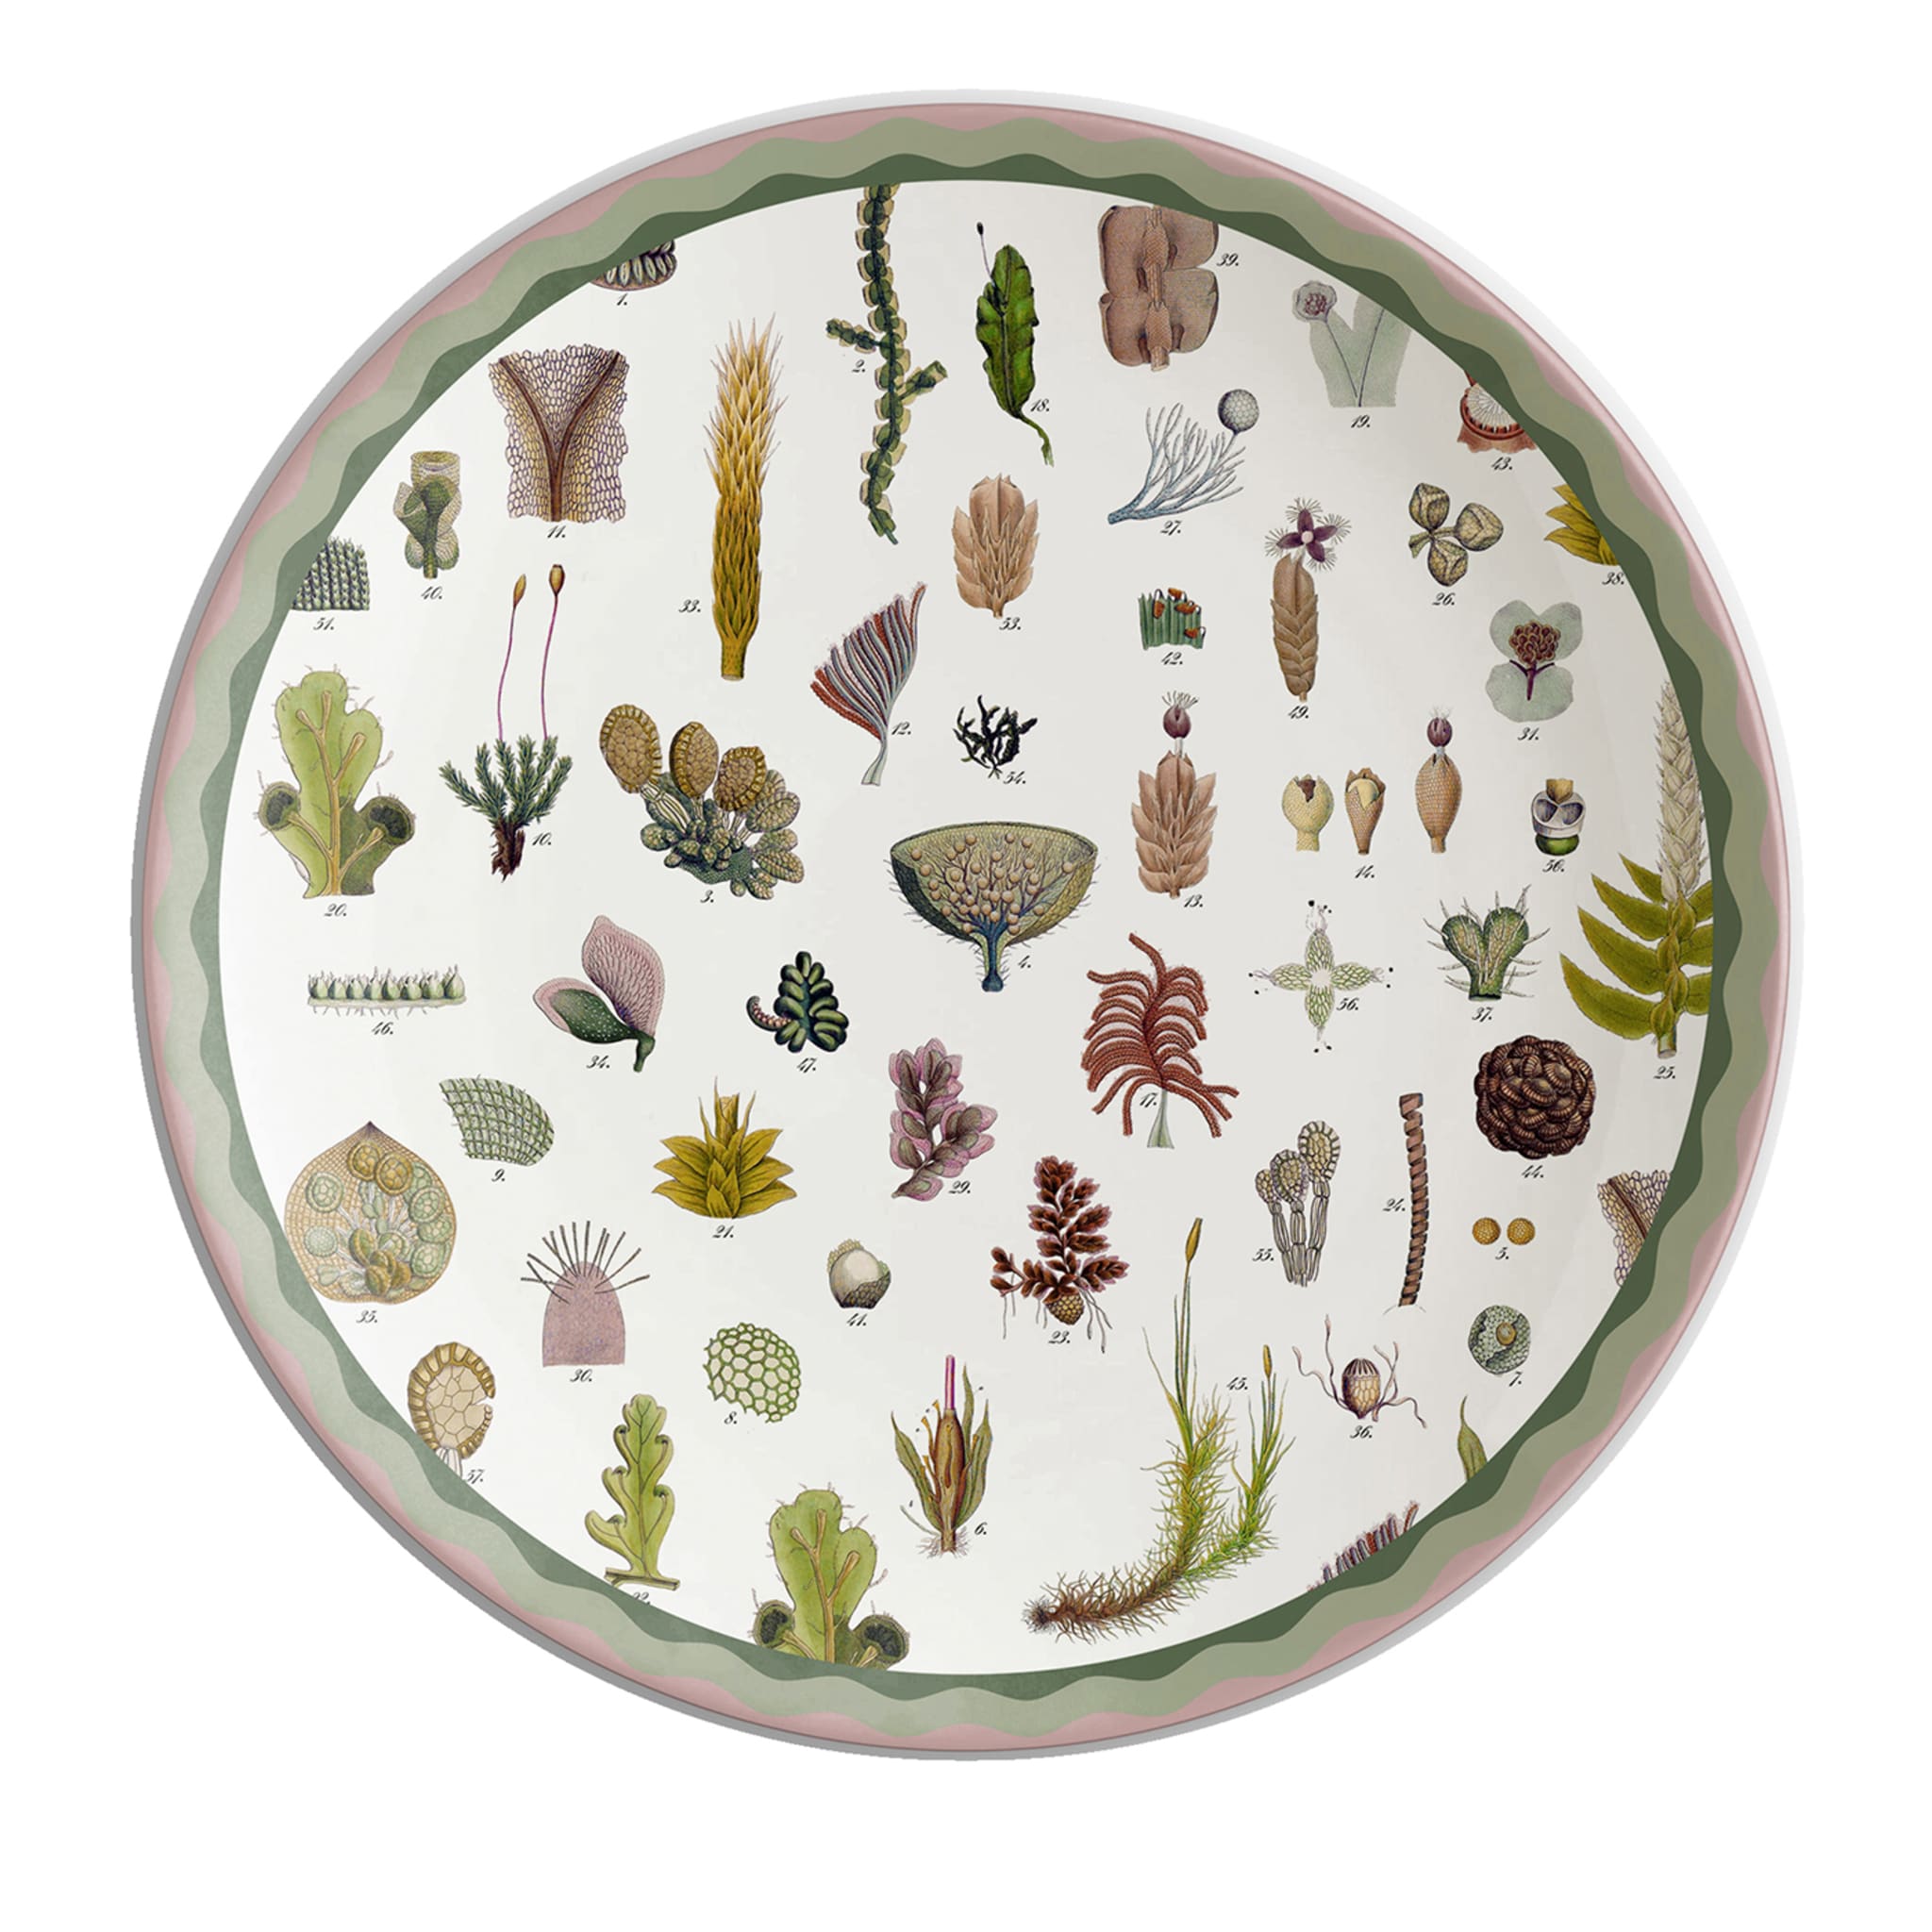 Cabinet De Curiosités Porcelain Charger Plate With Seaweed - Main view